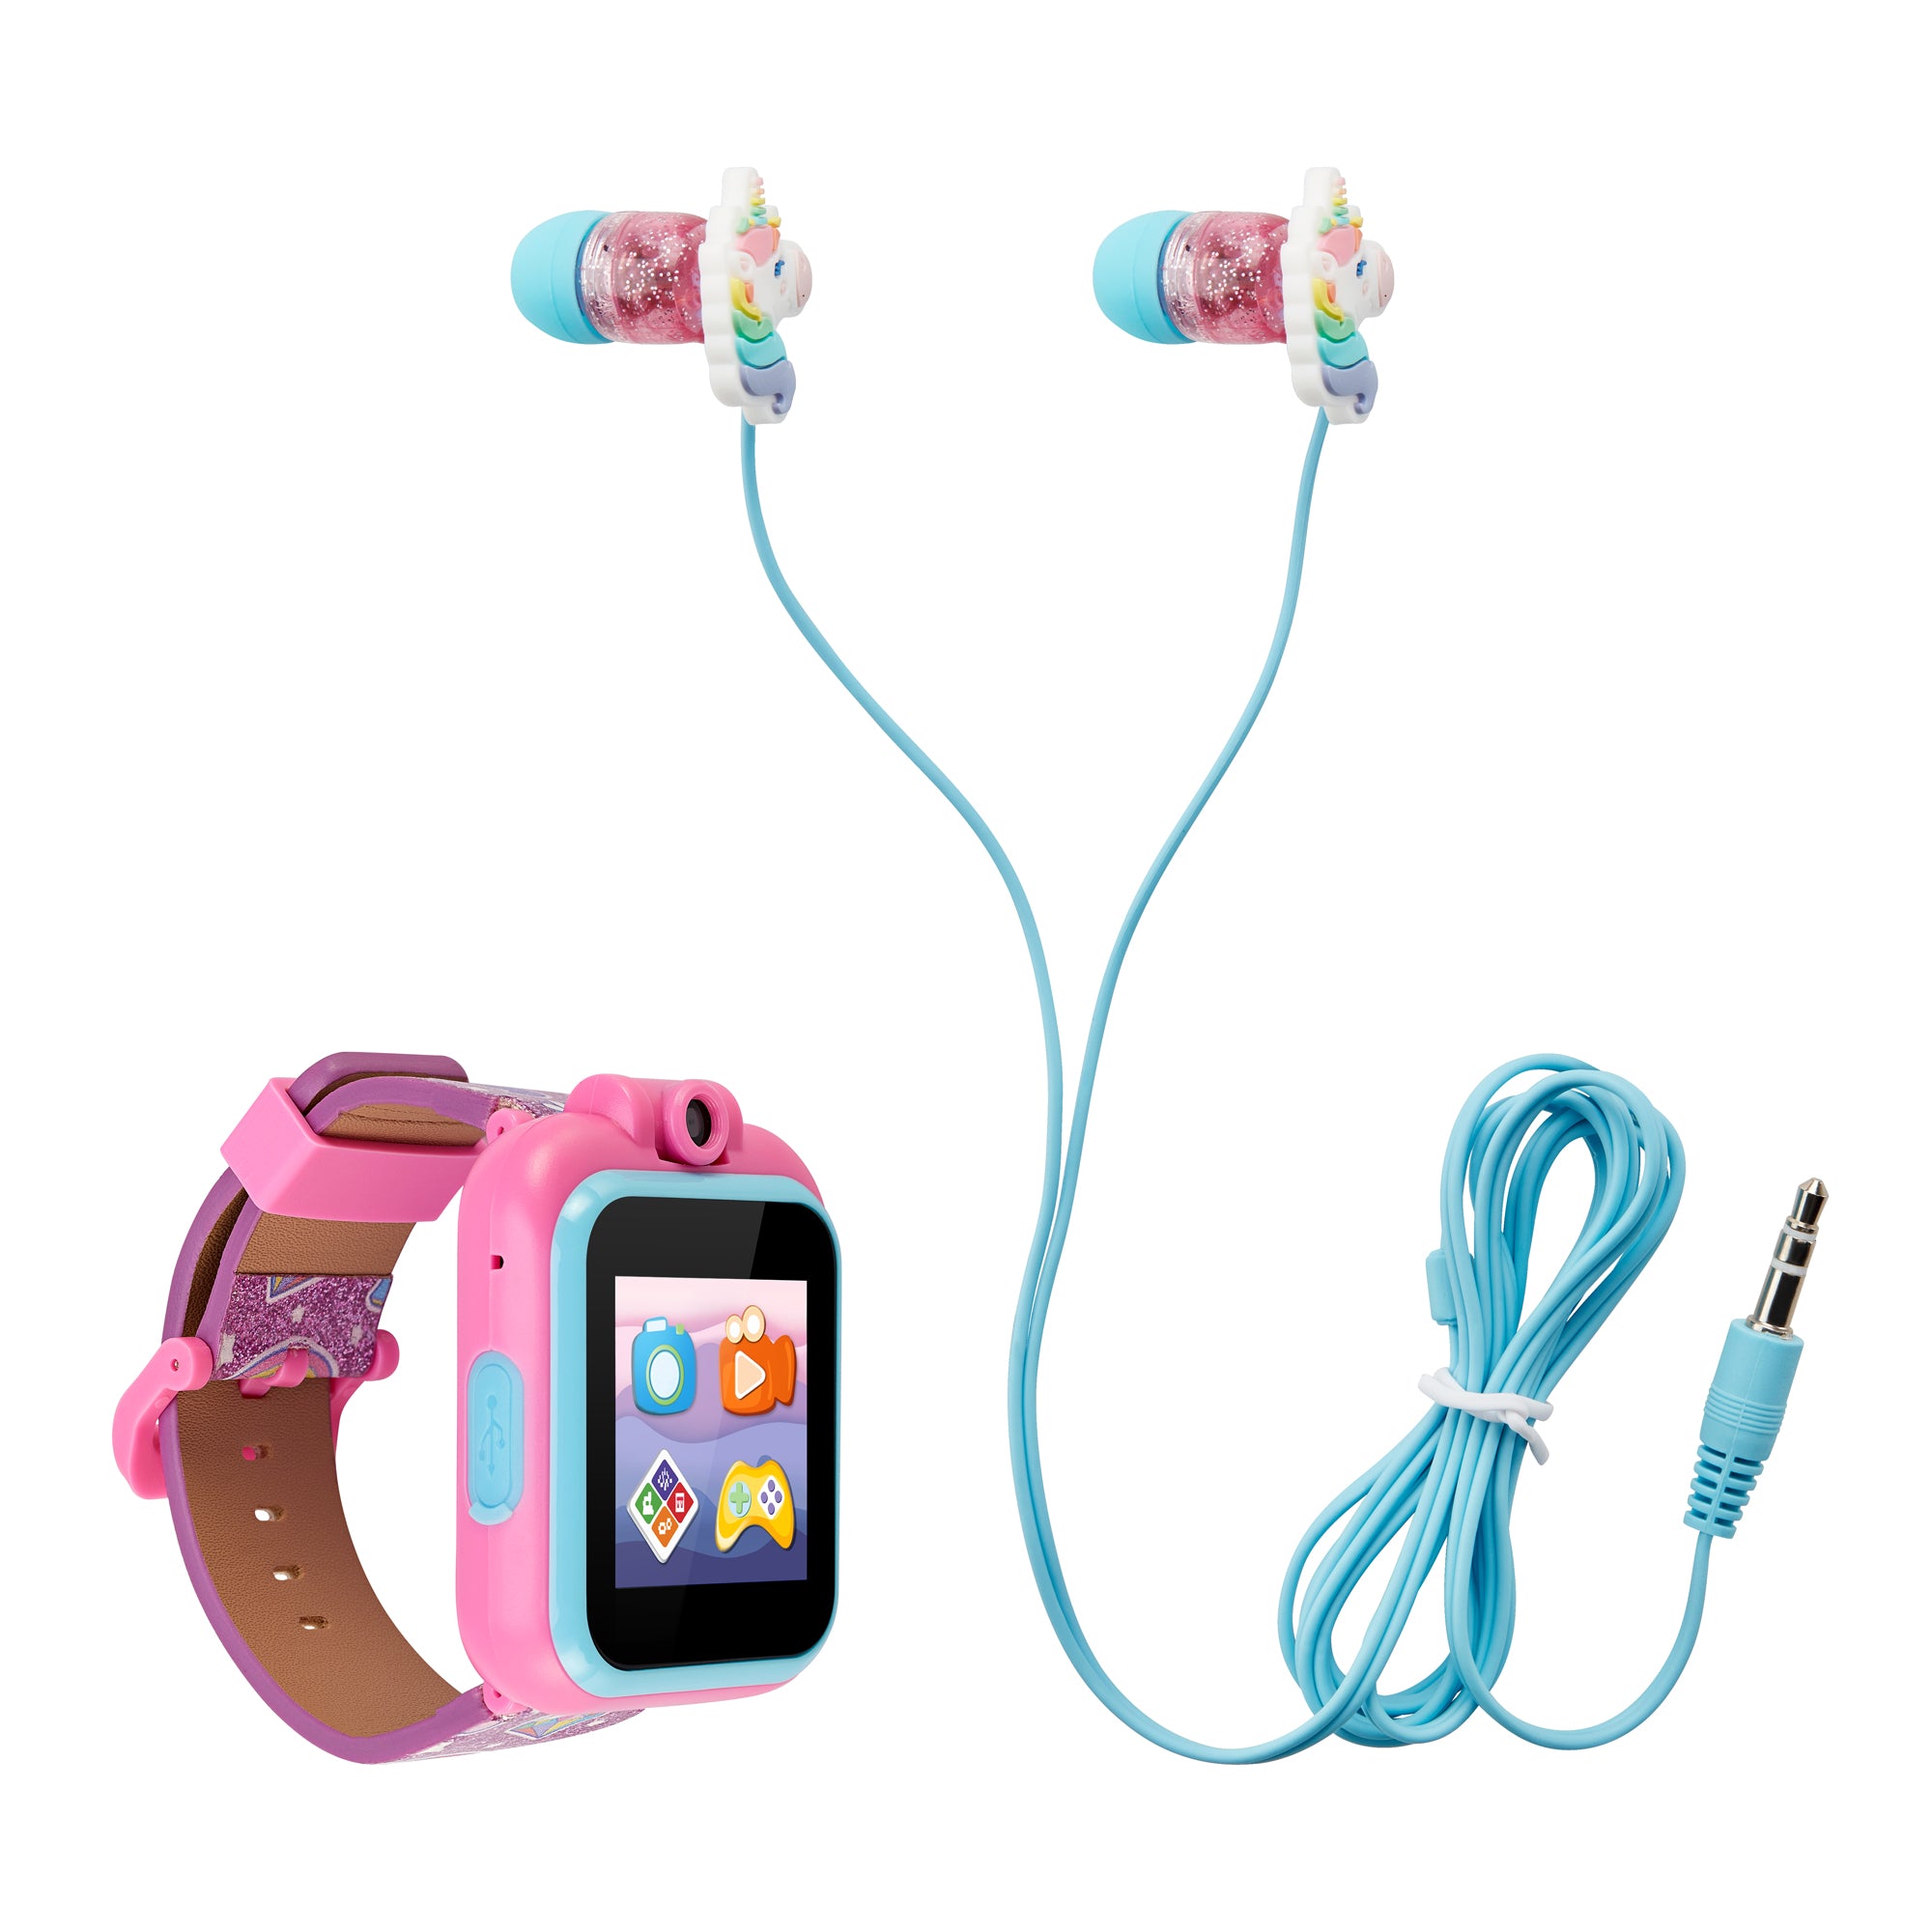 Playzoom Kids Smartwatch & Earbuds Set: Purple Glitter Unicorn